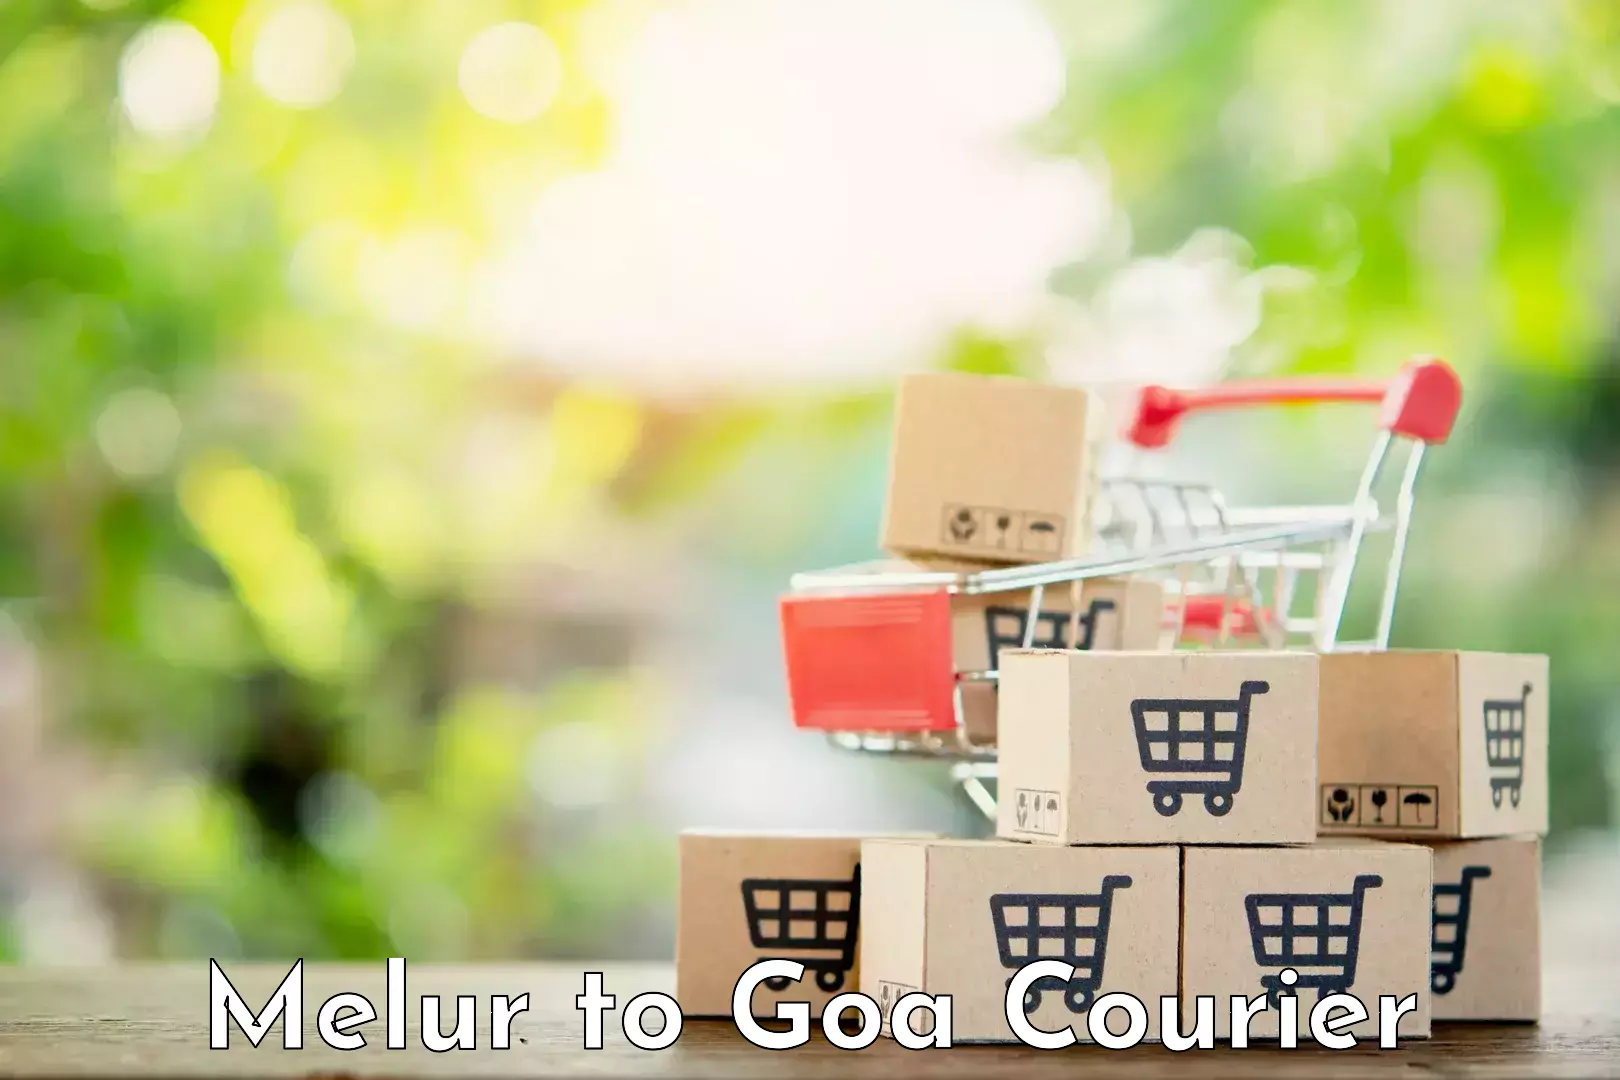 High-performance logistics Melur to South Goa